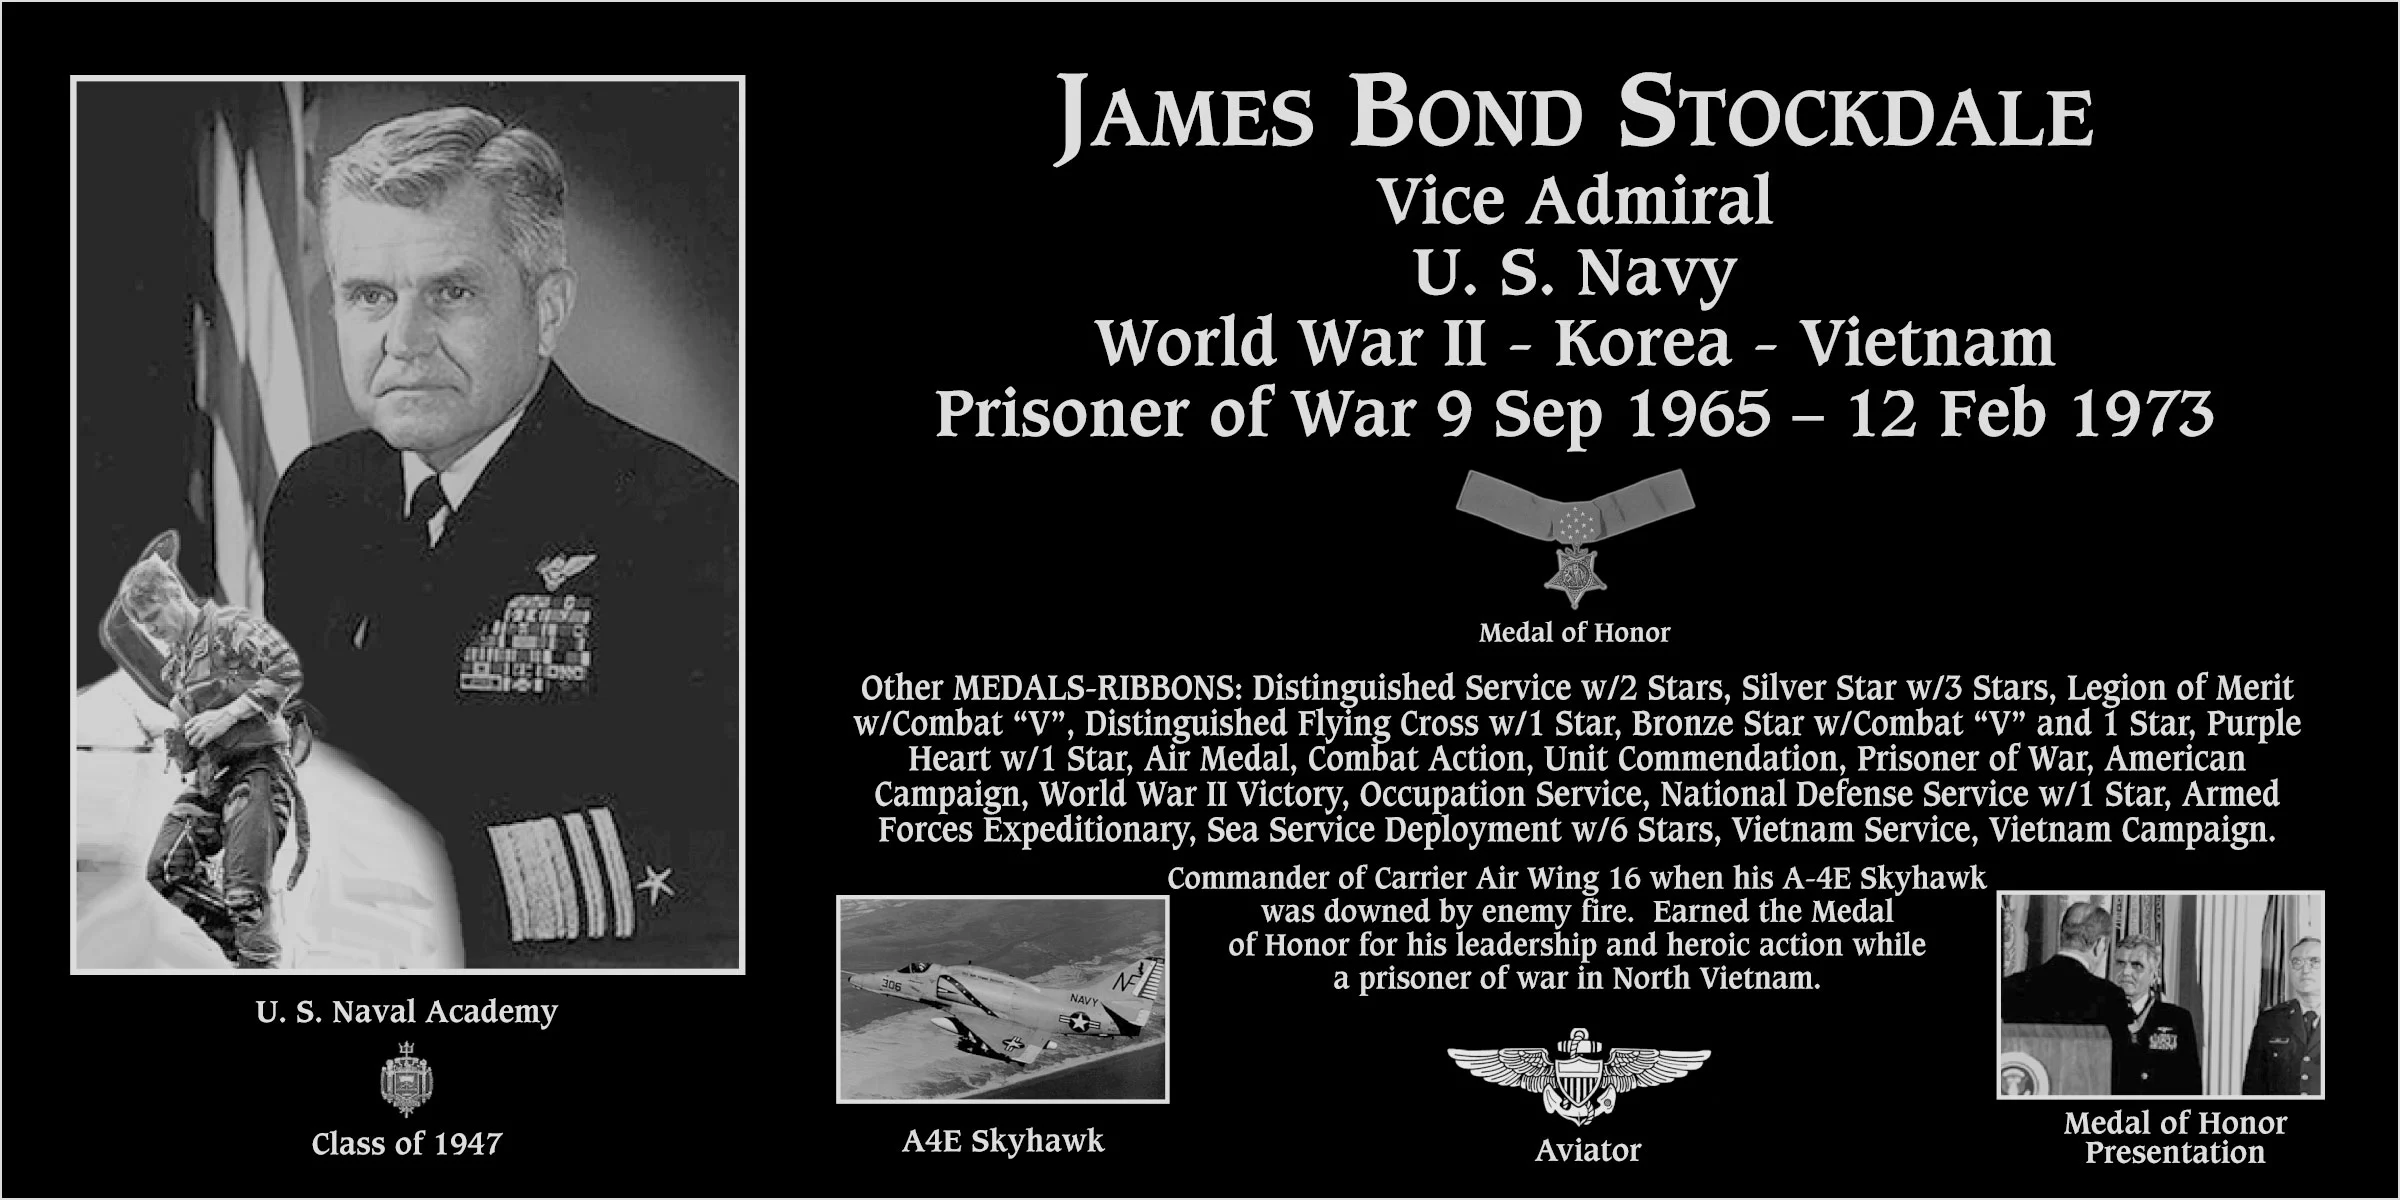 James Bond Stockdale